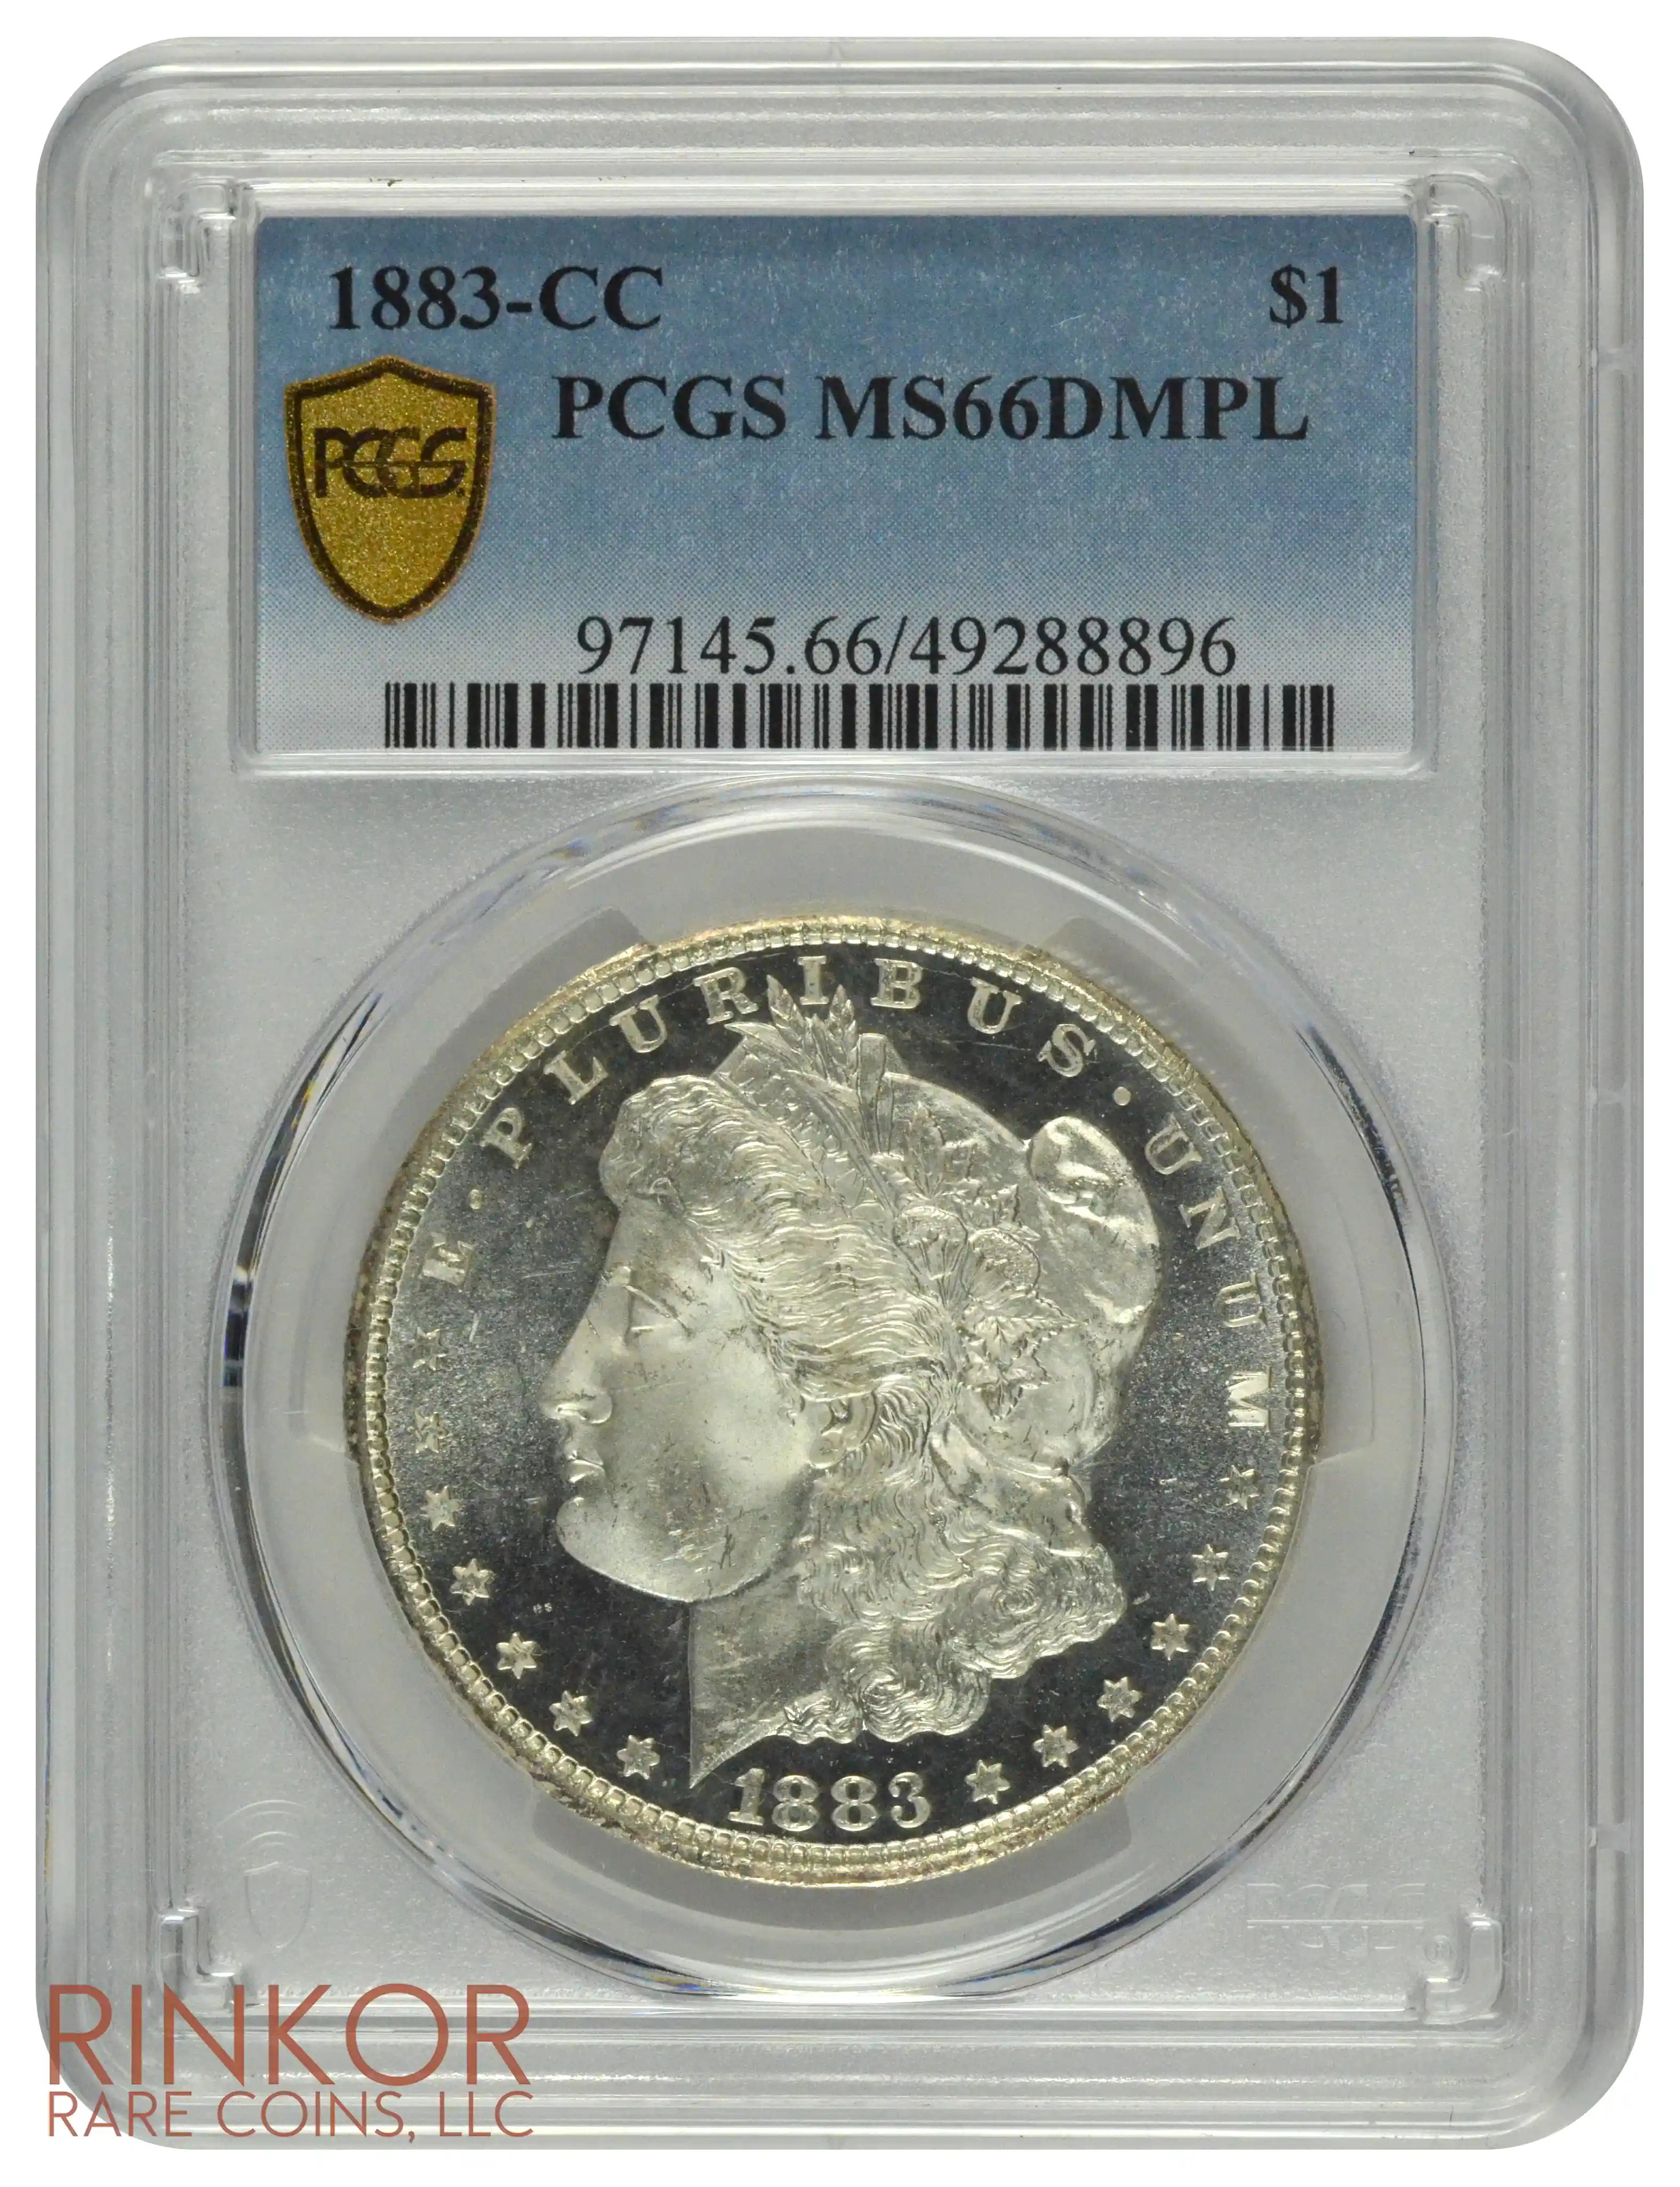 1883-CC $1 PCGS MS 66 DMPL